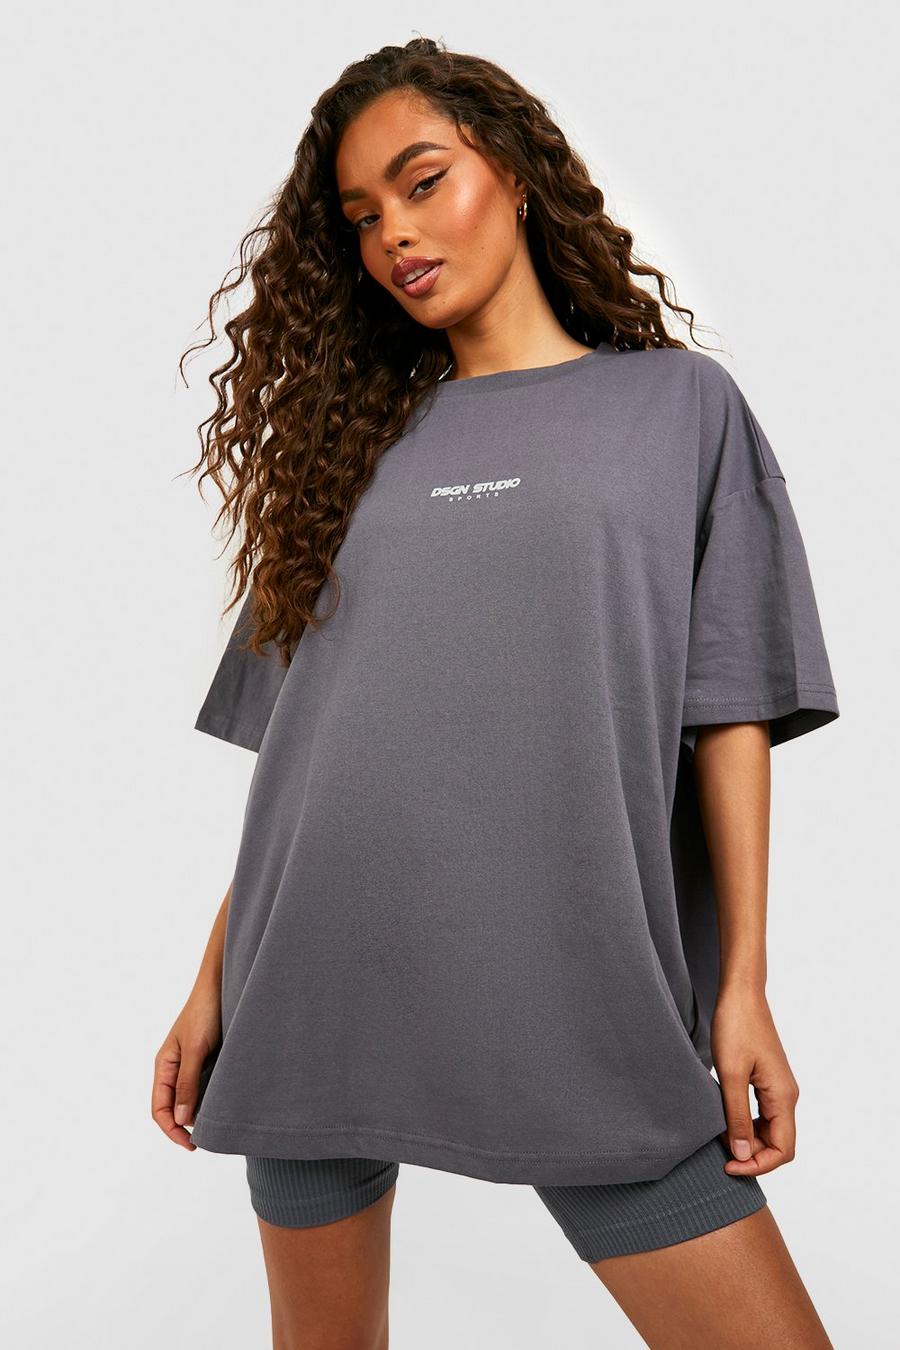 Camiseta oversize con eslogan deportivo Dsgn Studio, Charcoal gris